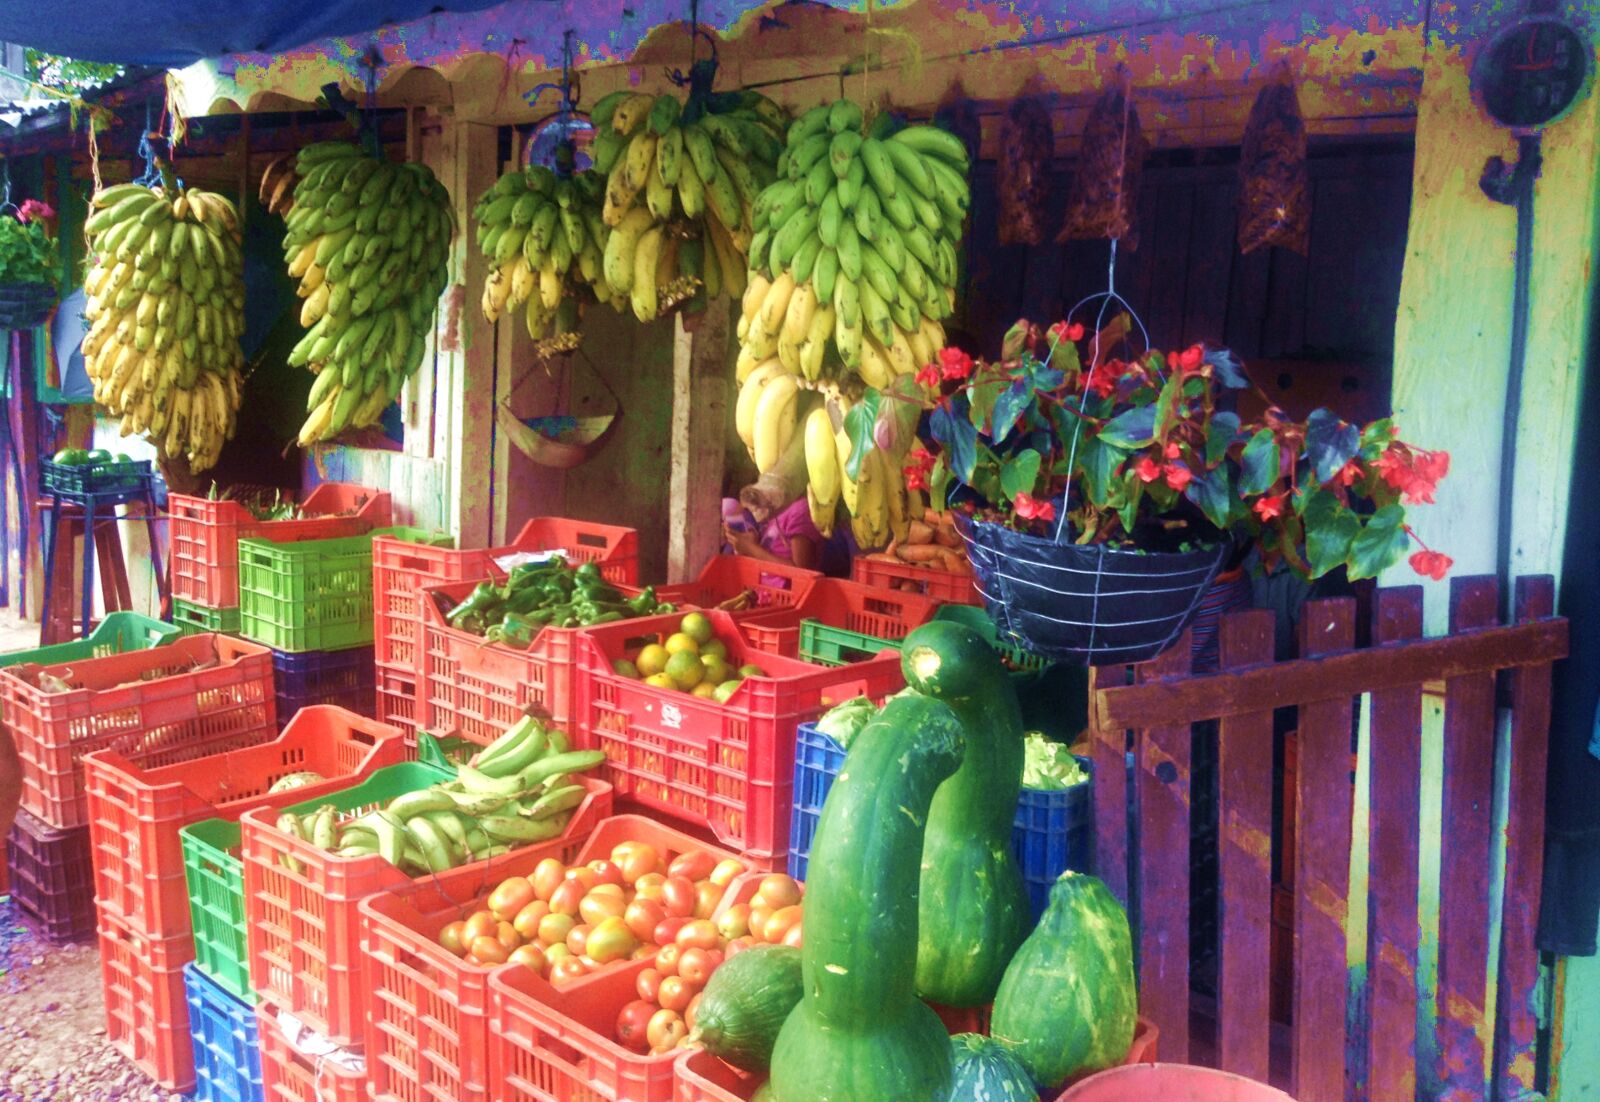 iPad mini back camera 3.3mm f/2.4 sample photo. Bananas, fruit, tomatoes, vegetables photography